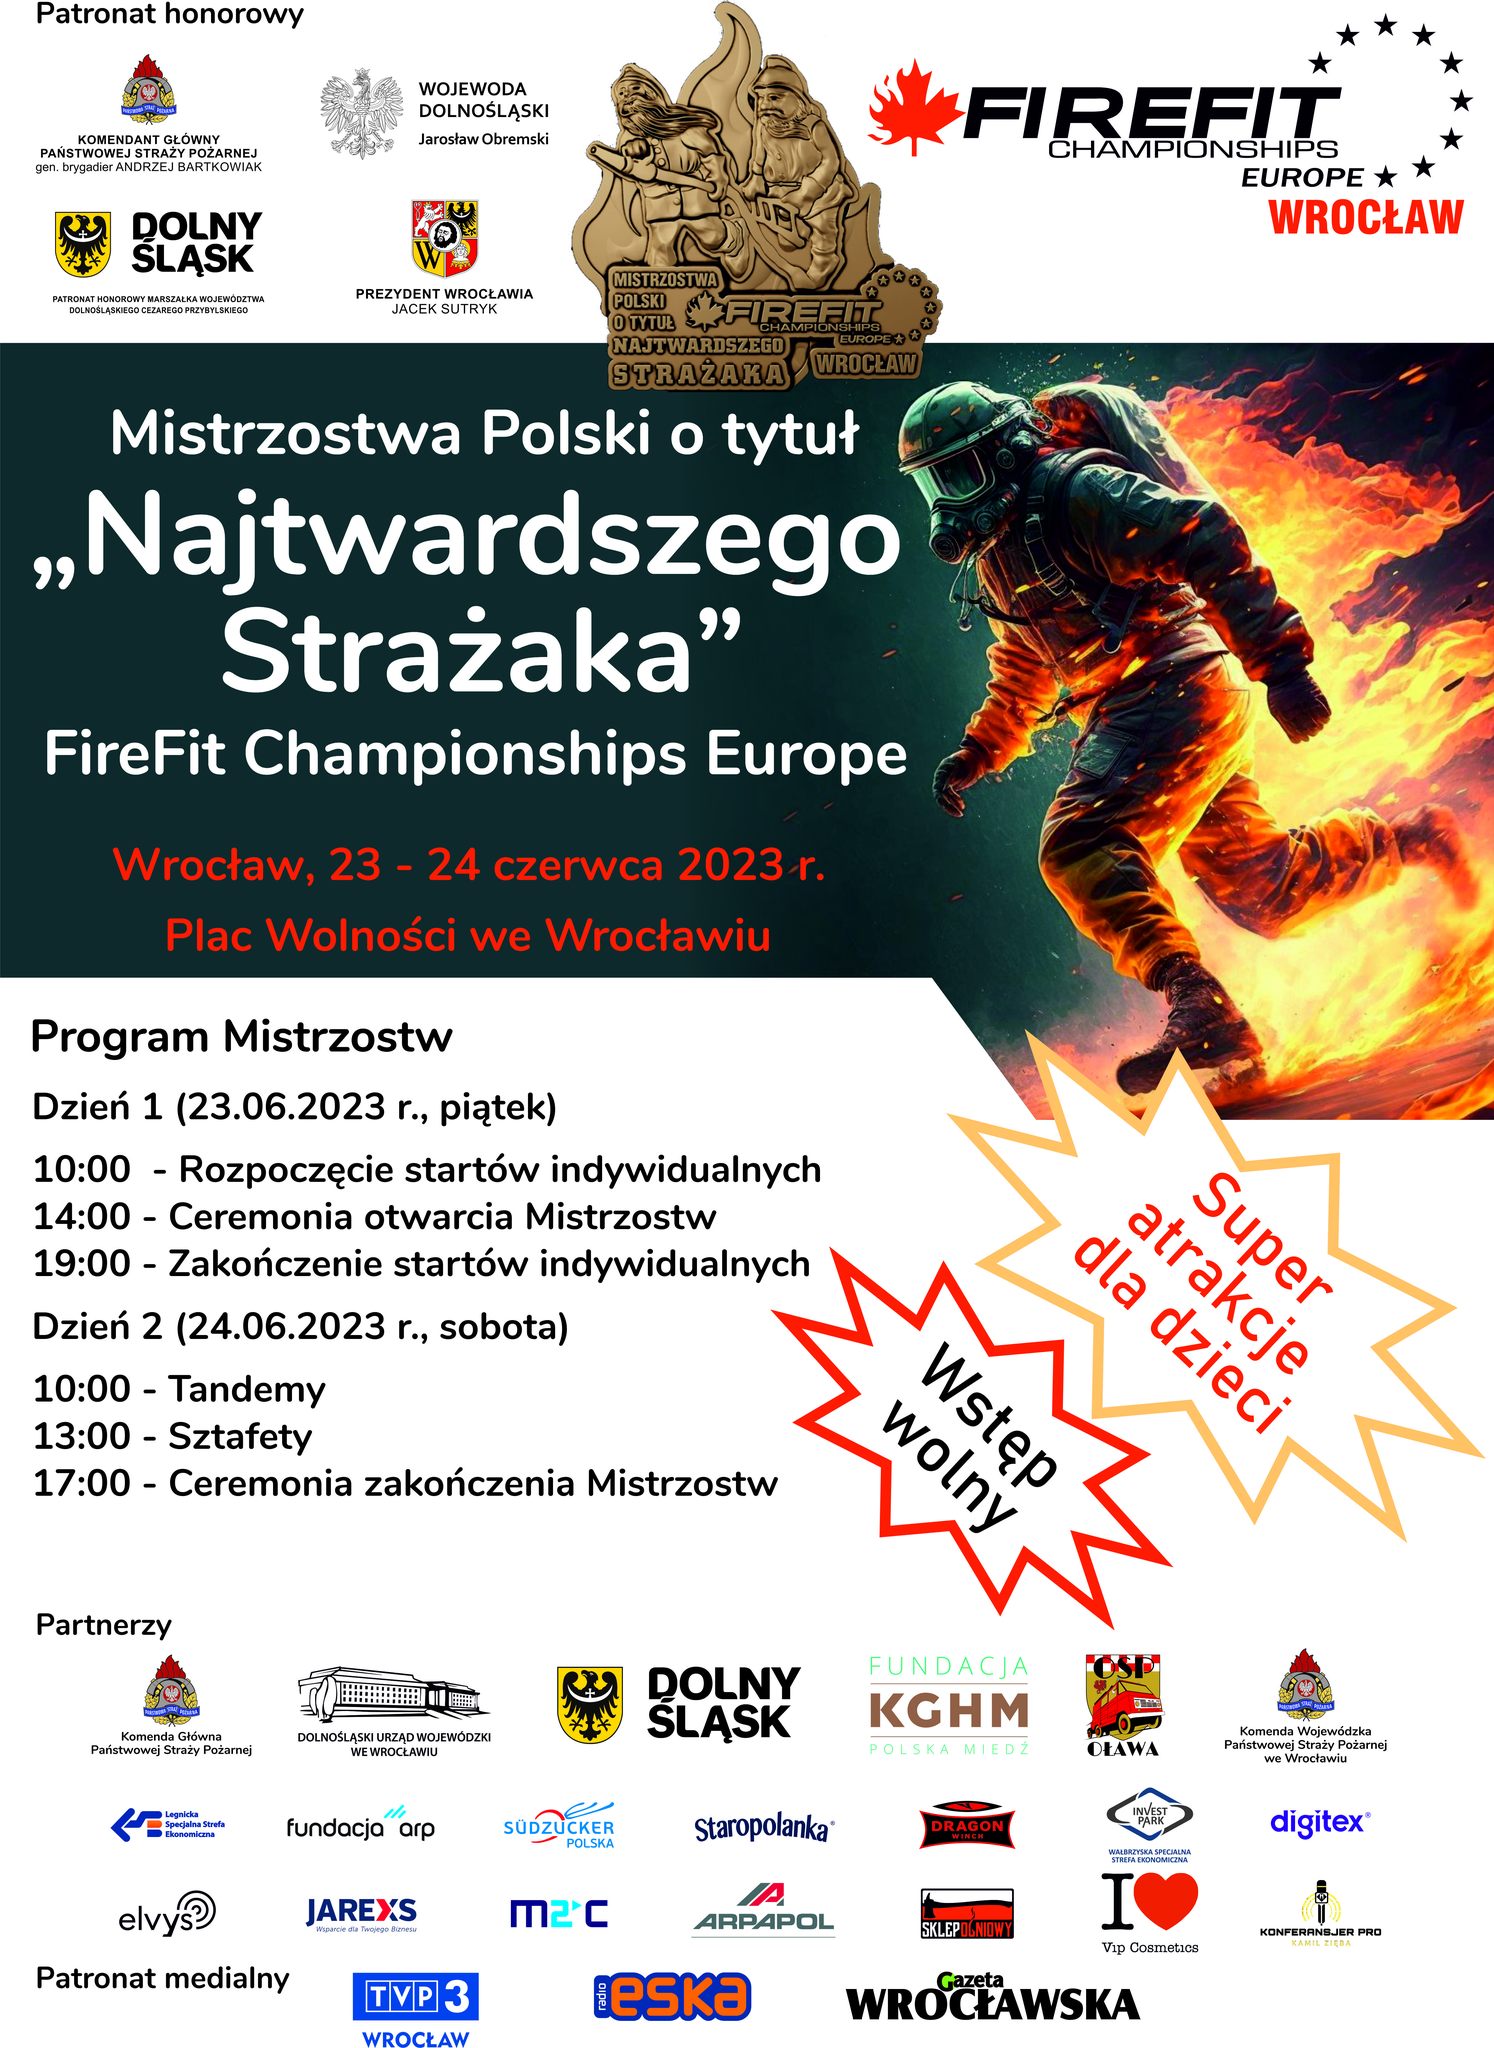 DRAGON WINCH oficjalnym partnerem FireFit Championships Europa!